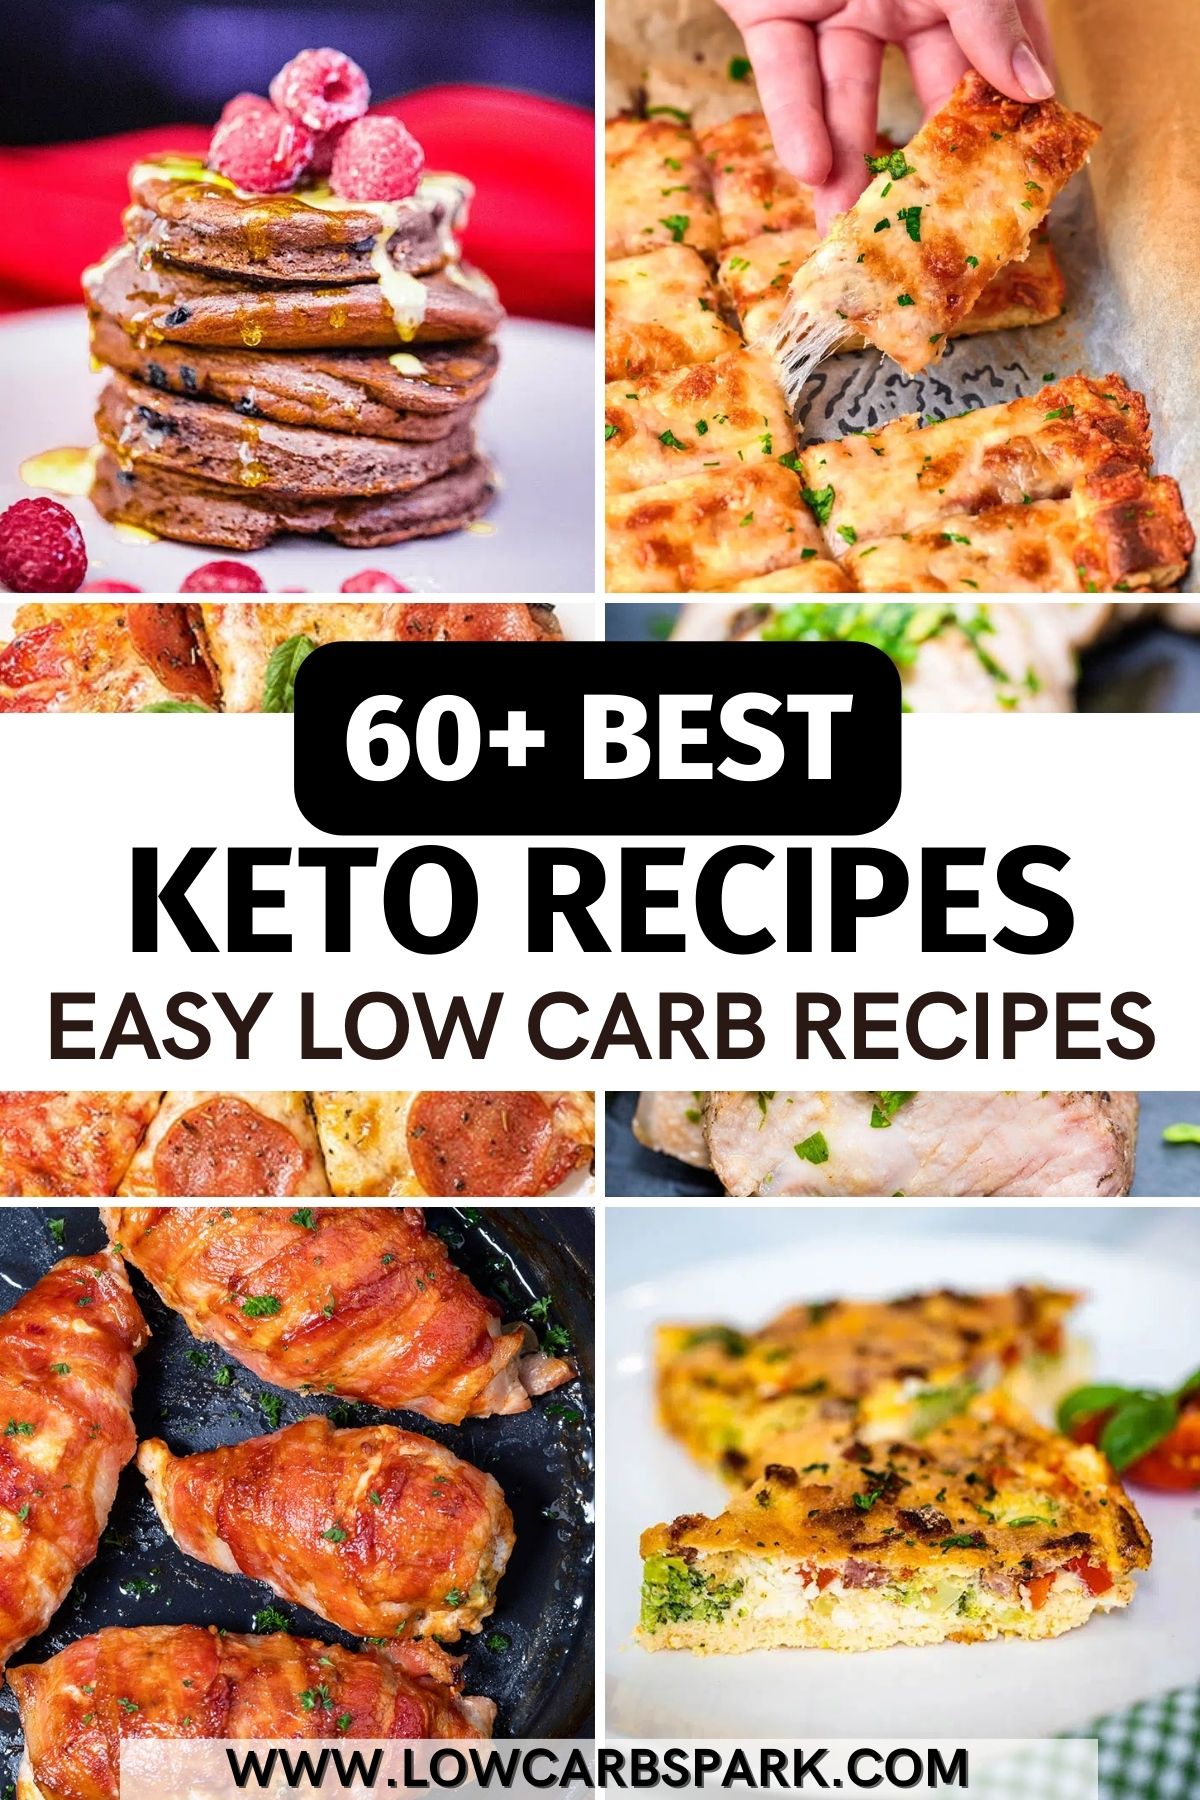 60+ Best Keto Recipes - Easy Low Carb Recipes